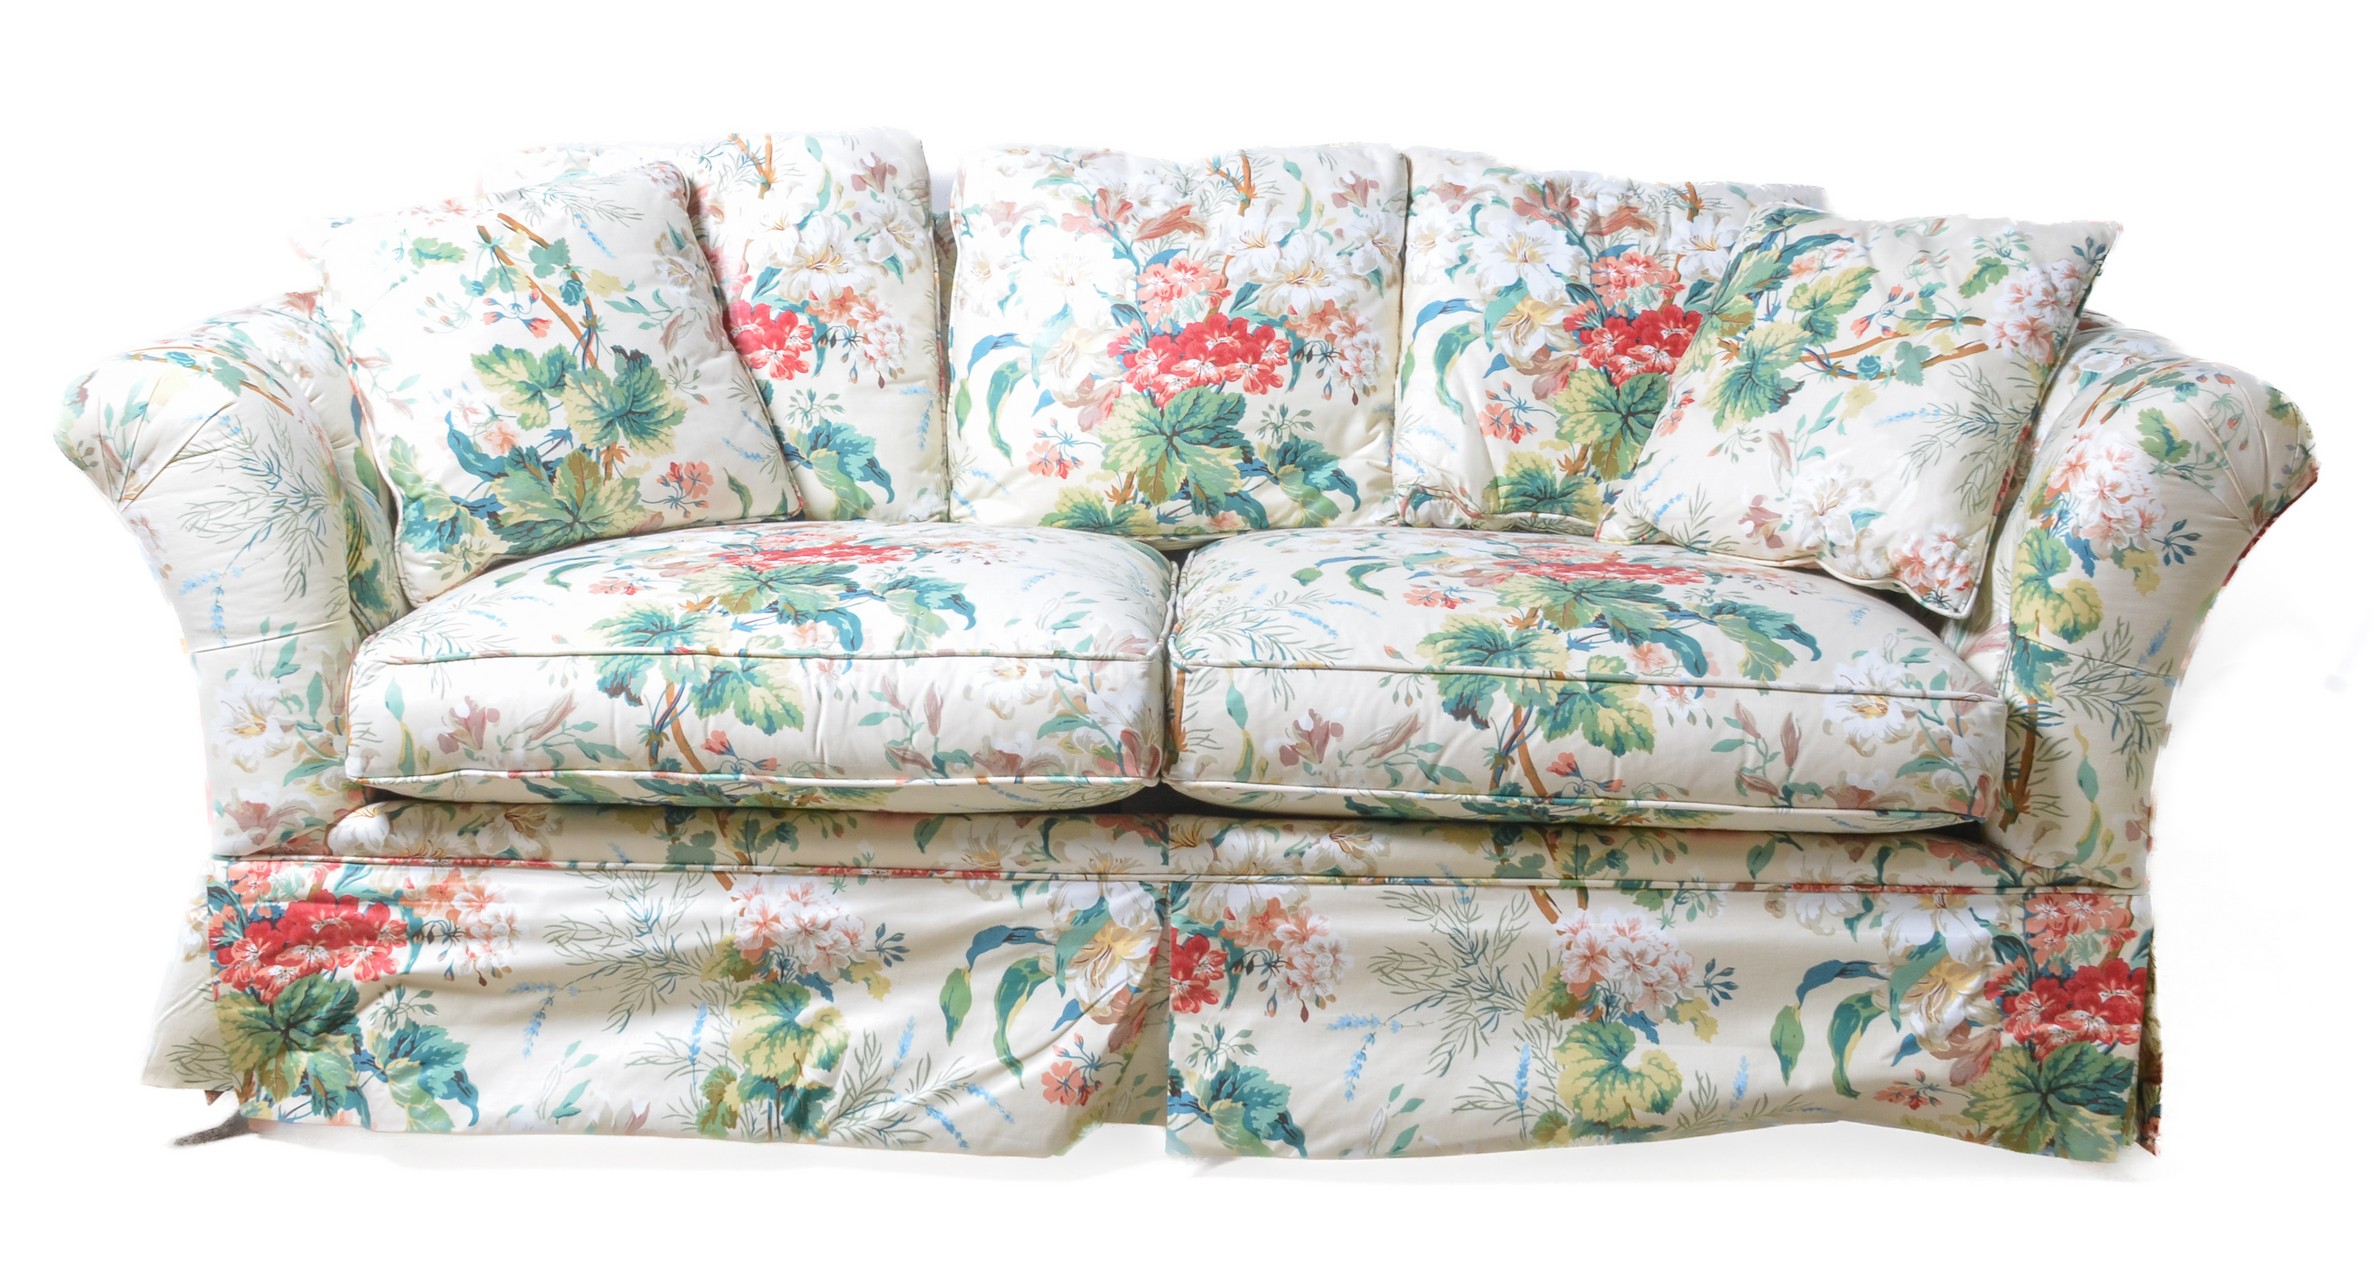 Kindel tufted upholstered sofa  3b5e57